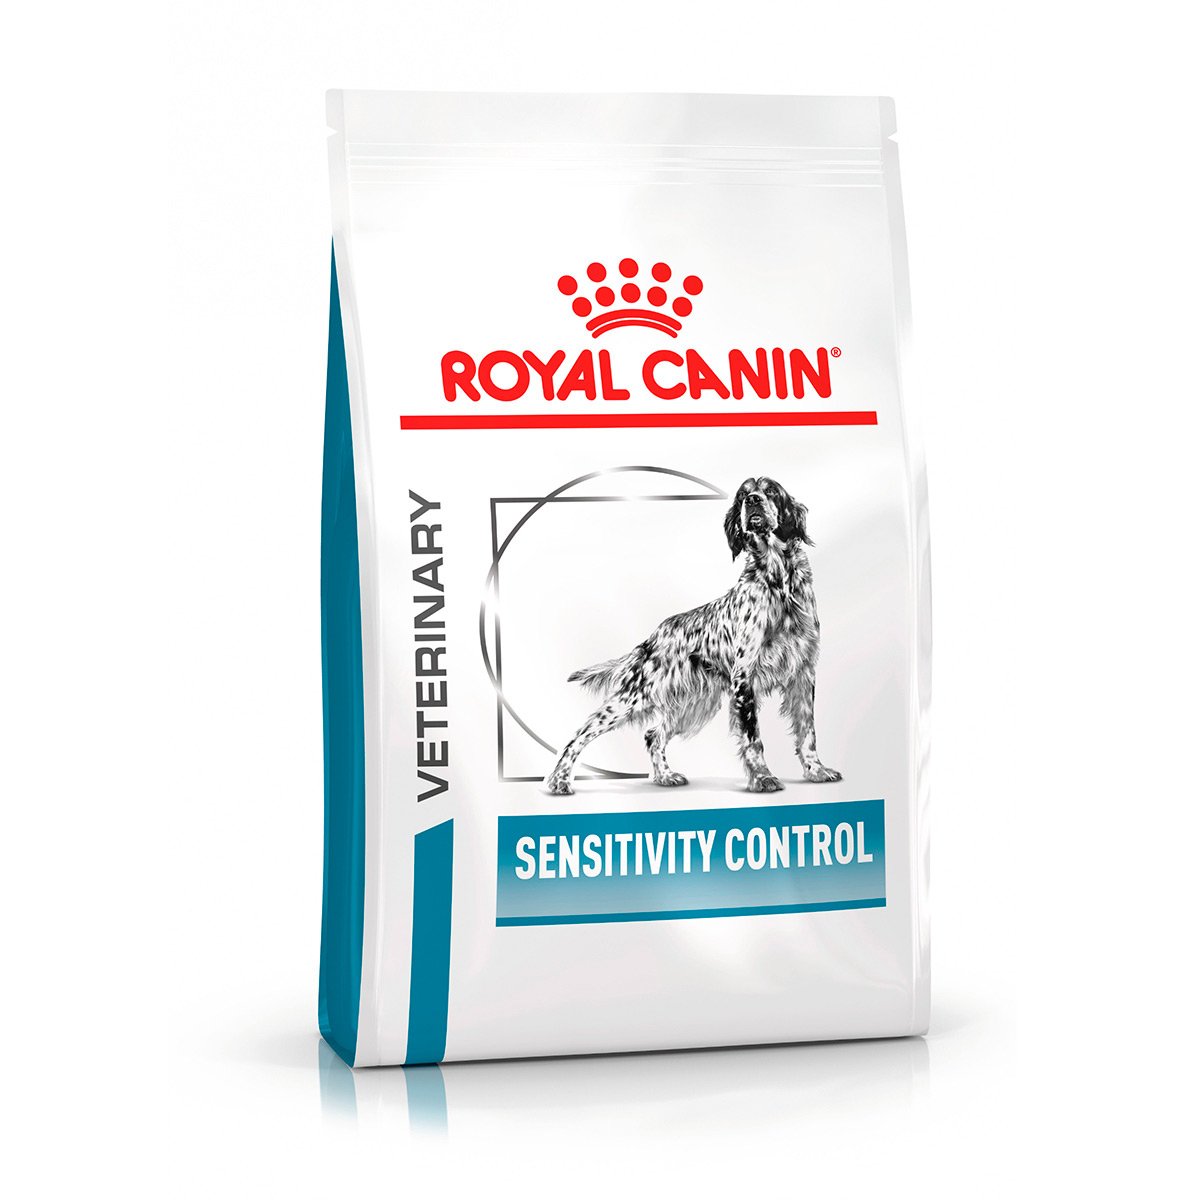 ROYAL CANIN Veterinary SENSITIVITY CONTROL Trockenfutter für Hunde 14kg von Royal Canin